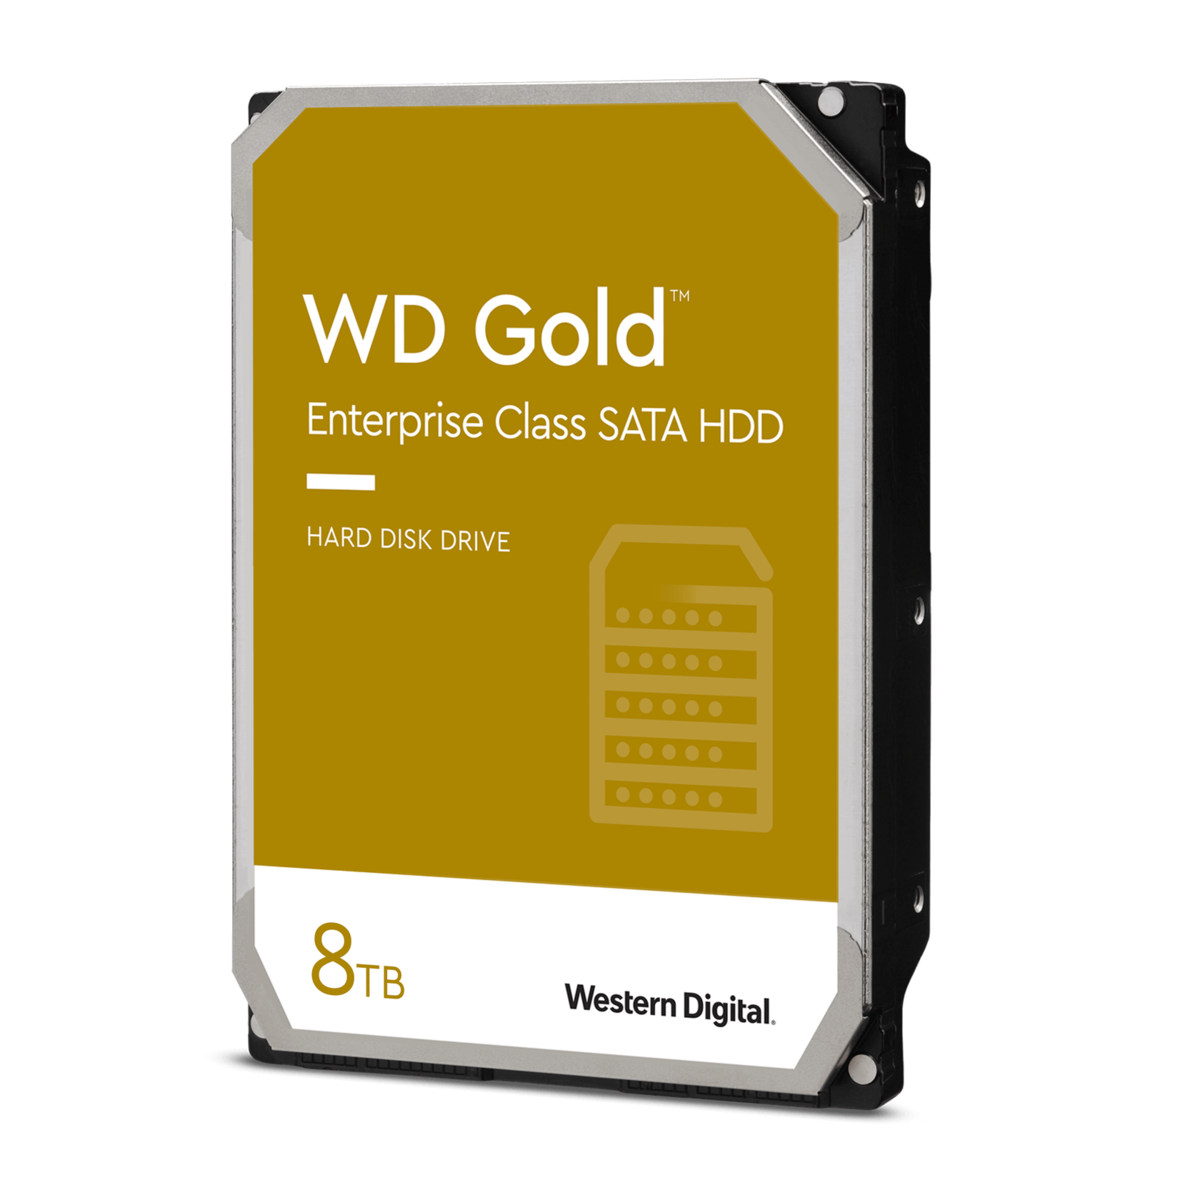 Prædike Uden tvivl Bore WD Gold Enterprise-Class Hard Drive WD8004FRYZ - hard drive - 8 TB - SATA  6Gb/s | Dell USA